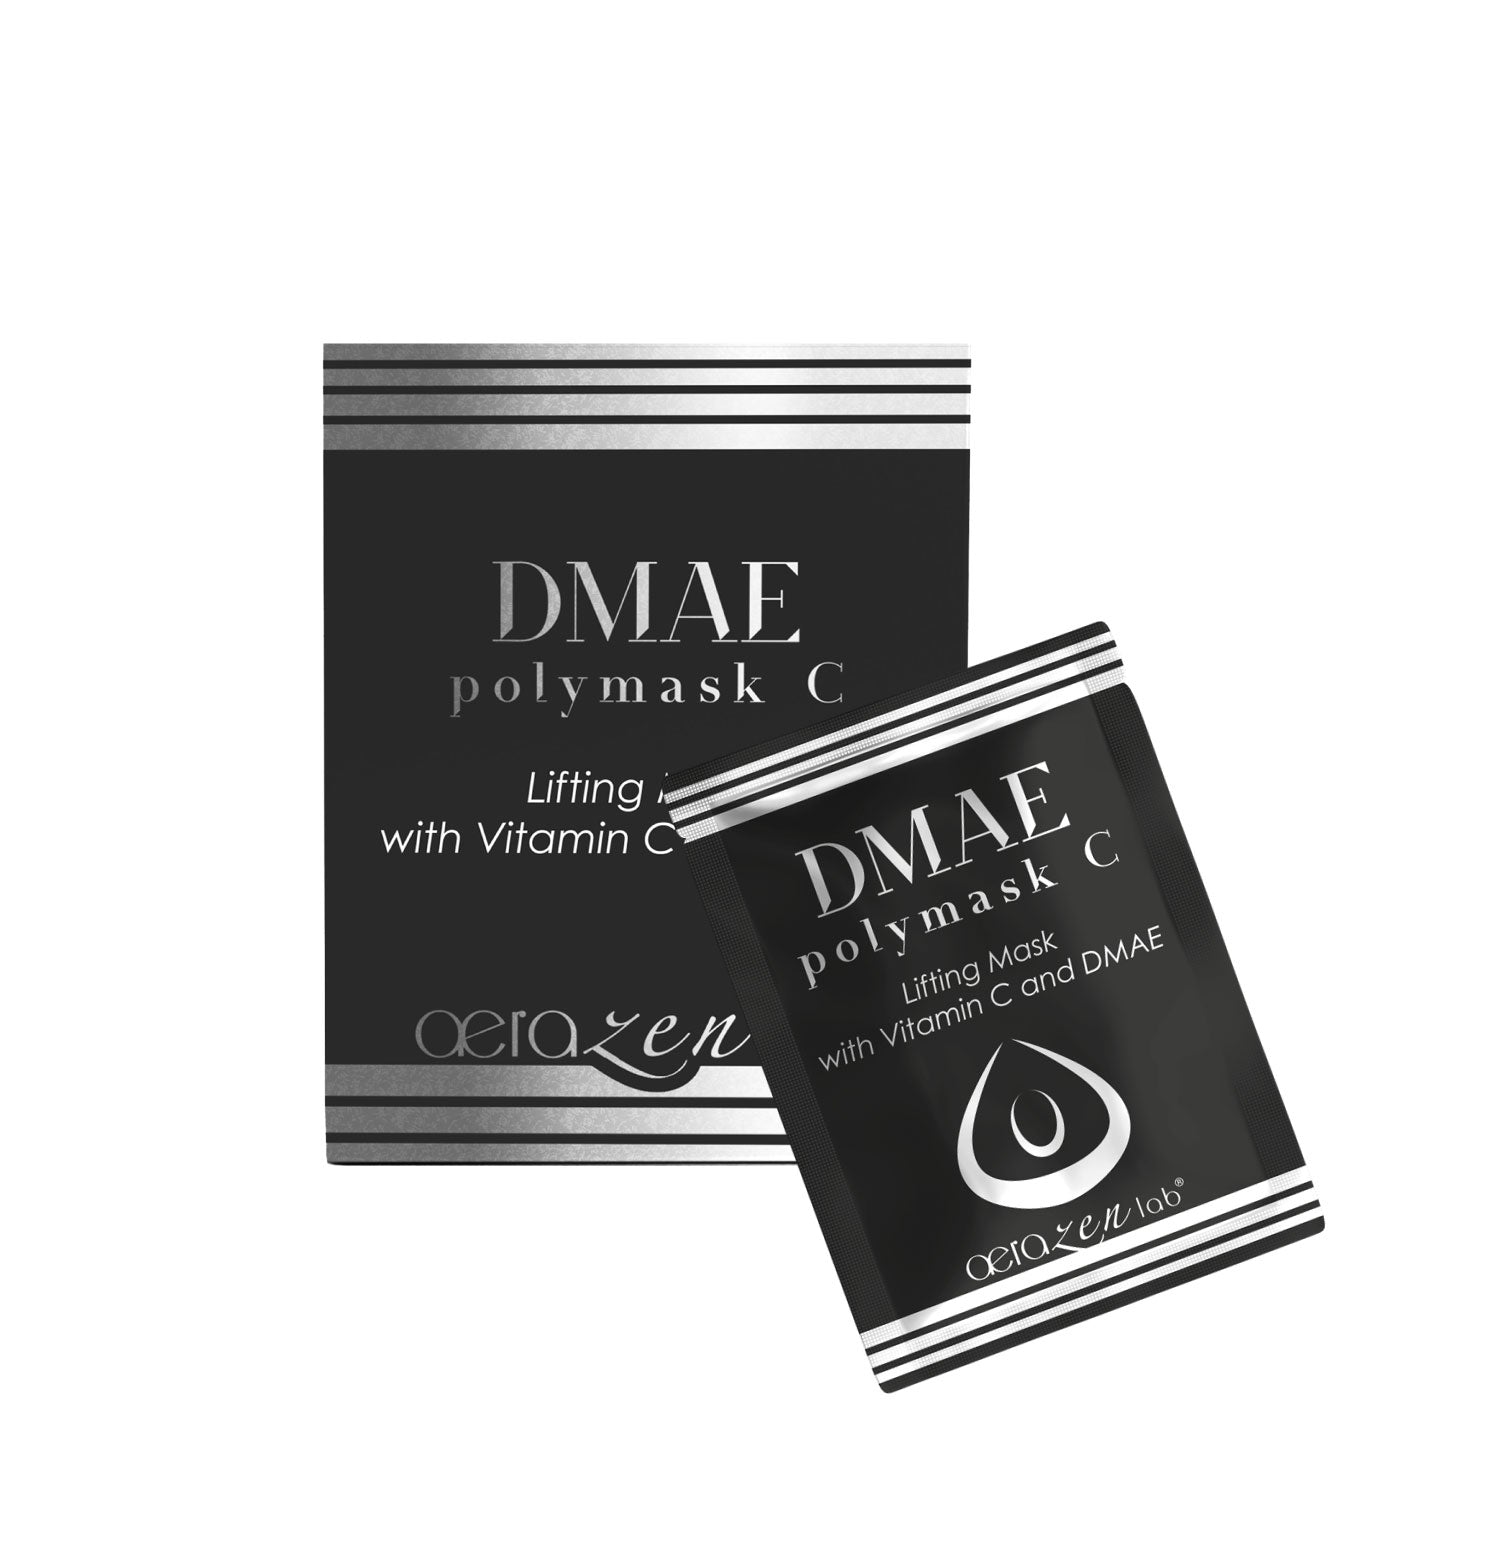 DMAE POLYMASK C - Maschera Lifting con Vitamina C e DMAE 1%